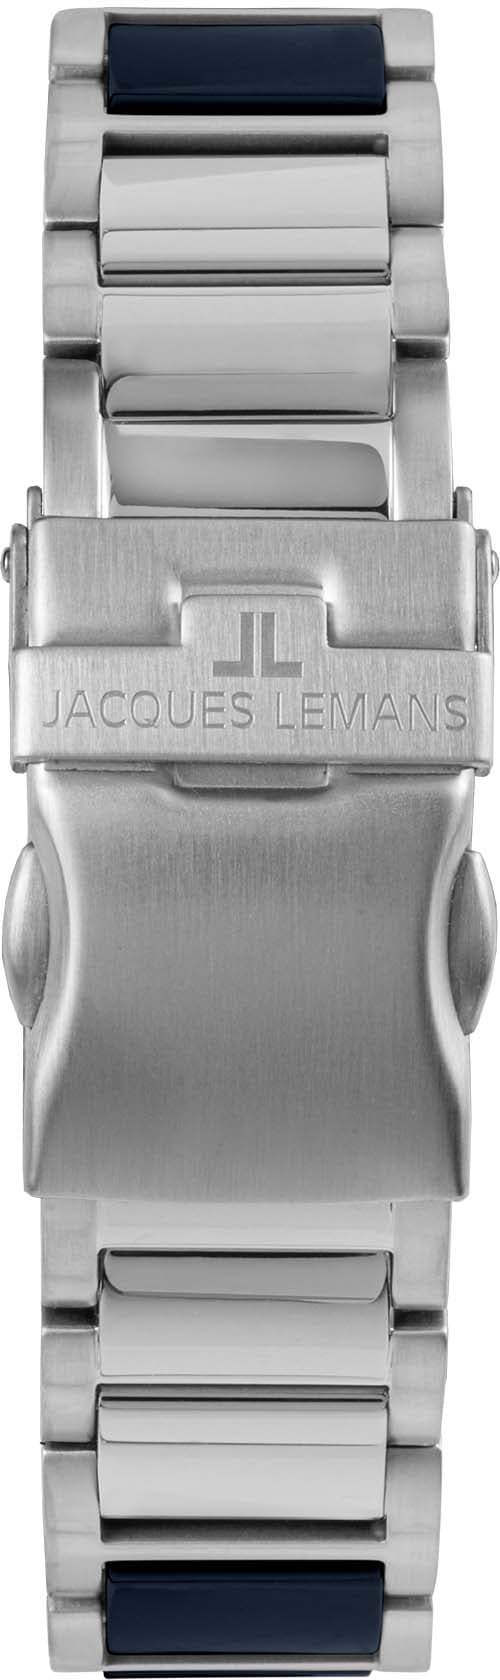 Jacques Lemans Onlineshop I\'m im »Liverpool, | 42-10B« walking Keramikuhr